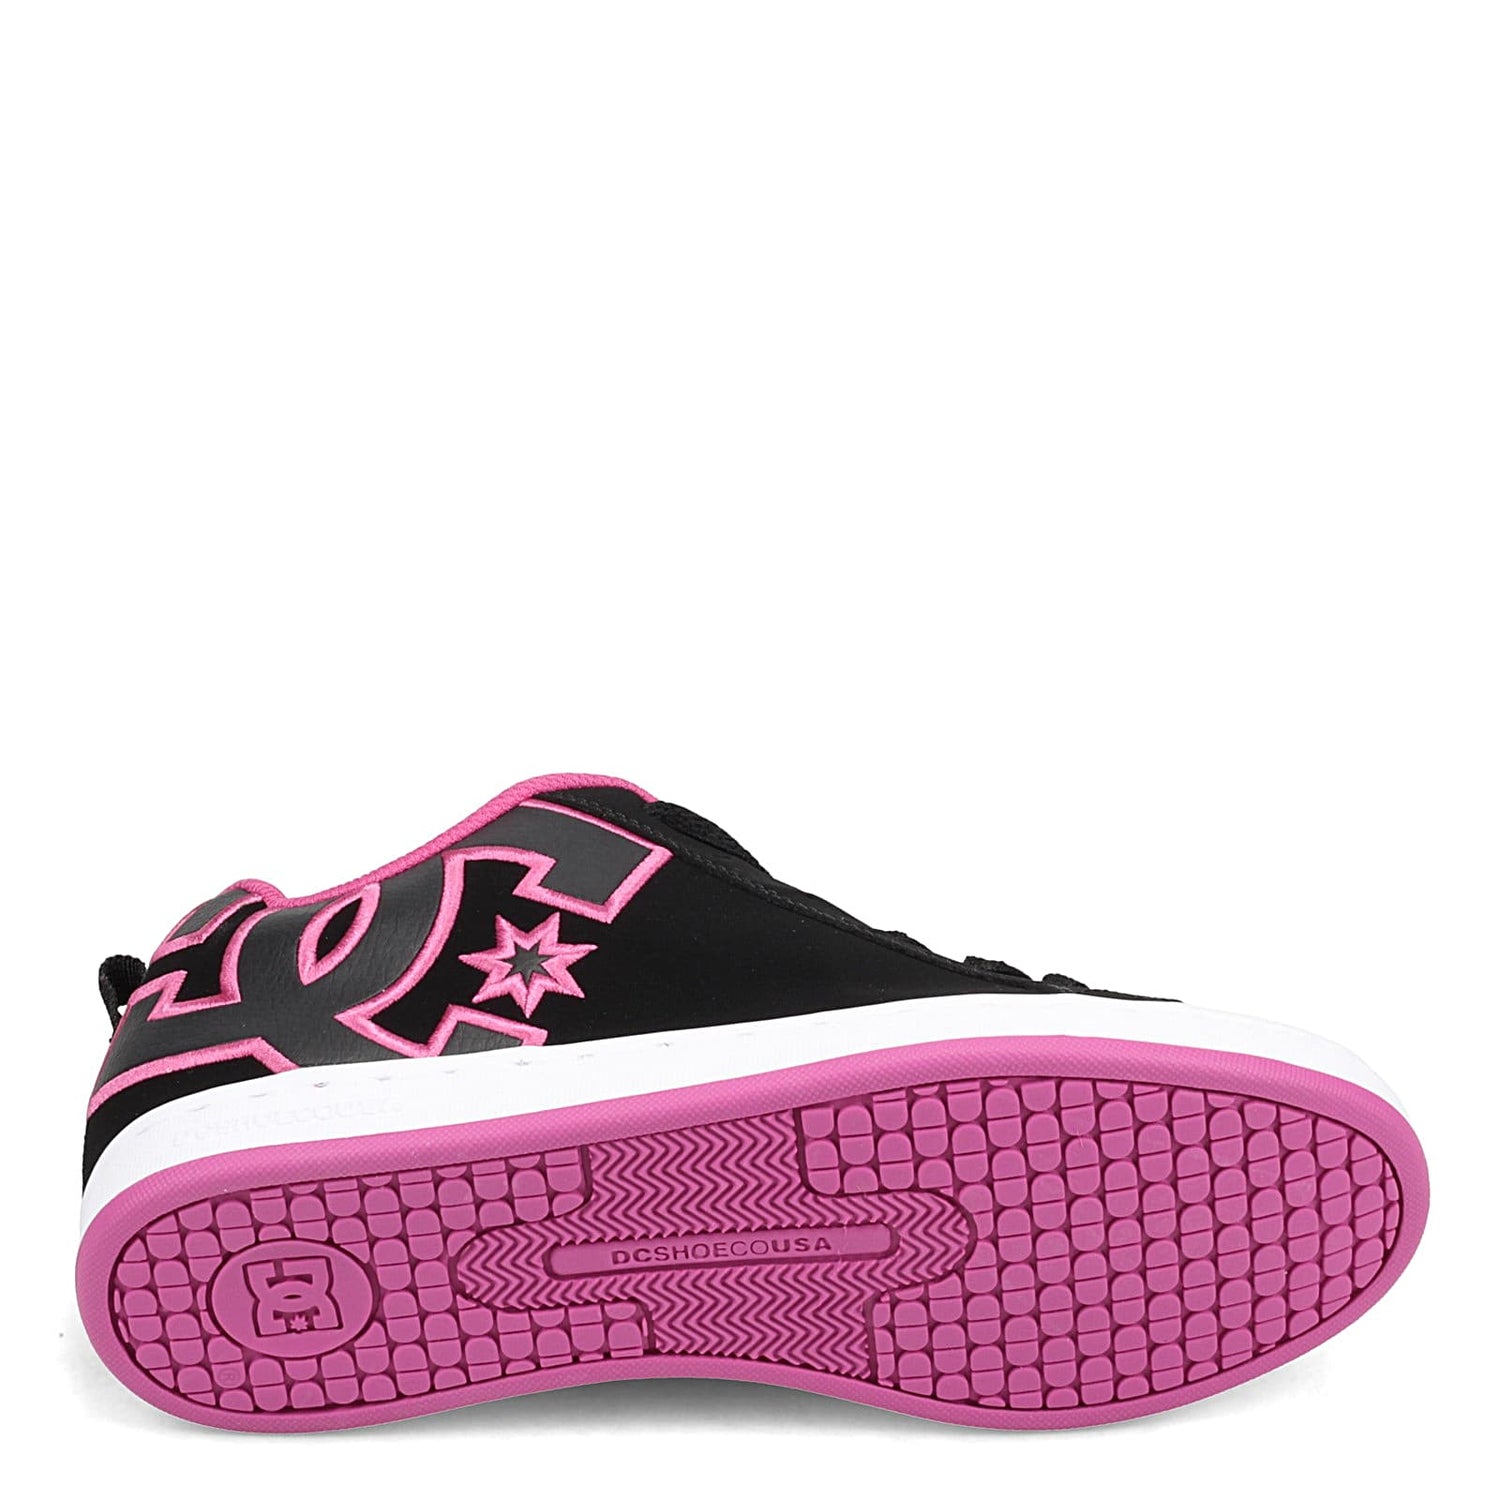 DC Shoes Women's Low-Top Sneakers, Black Pink, 2 UK